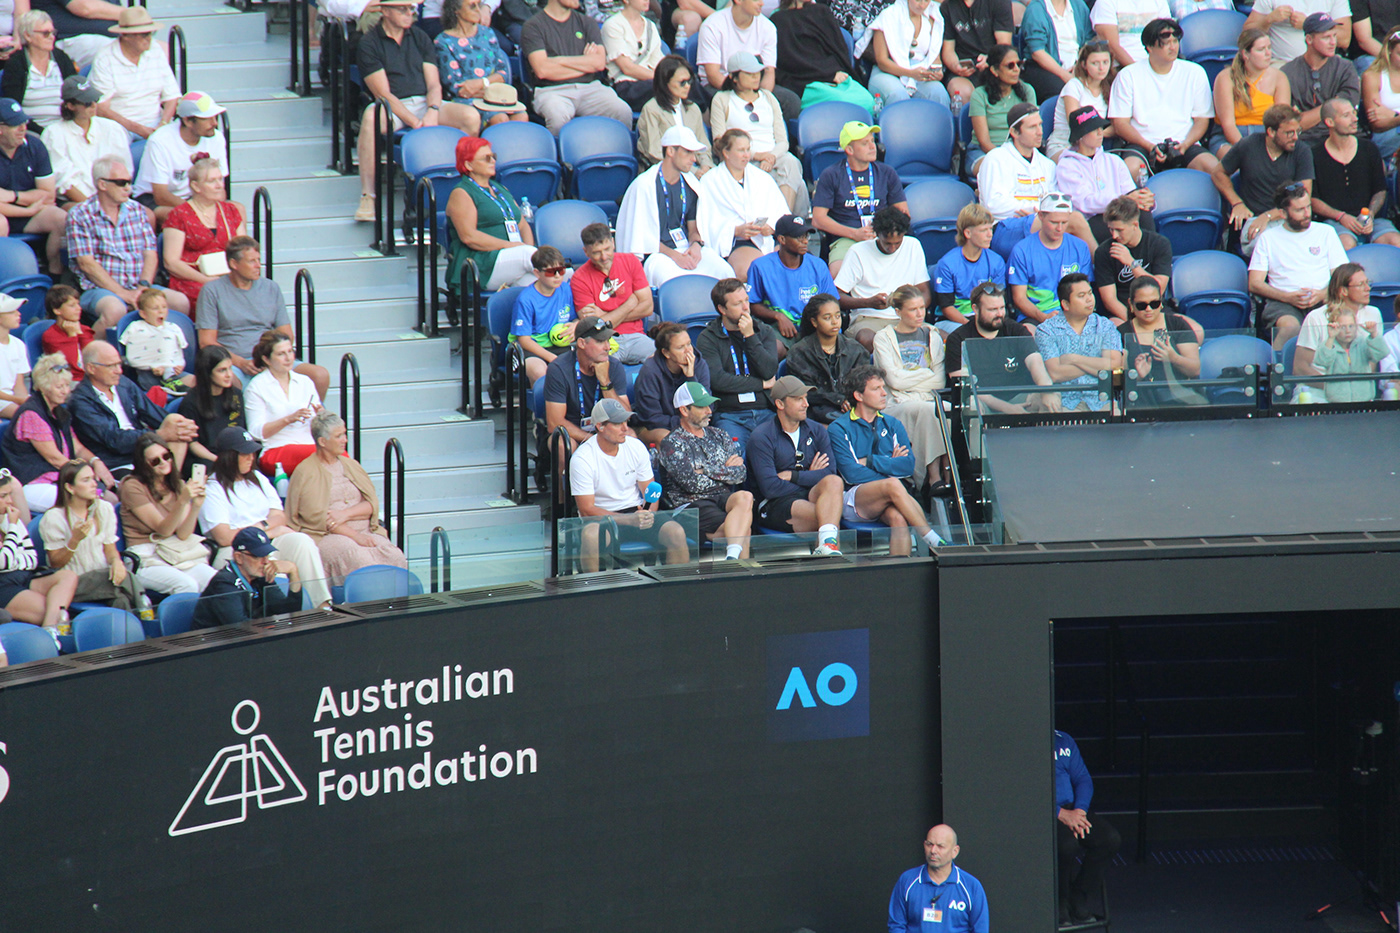 ao24 Australian Open wednesday opening week Melbourne victoria Australia tennis AO Melbourne park